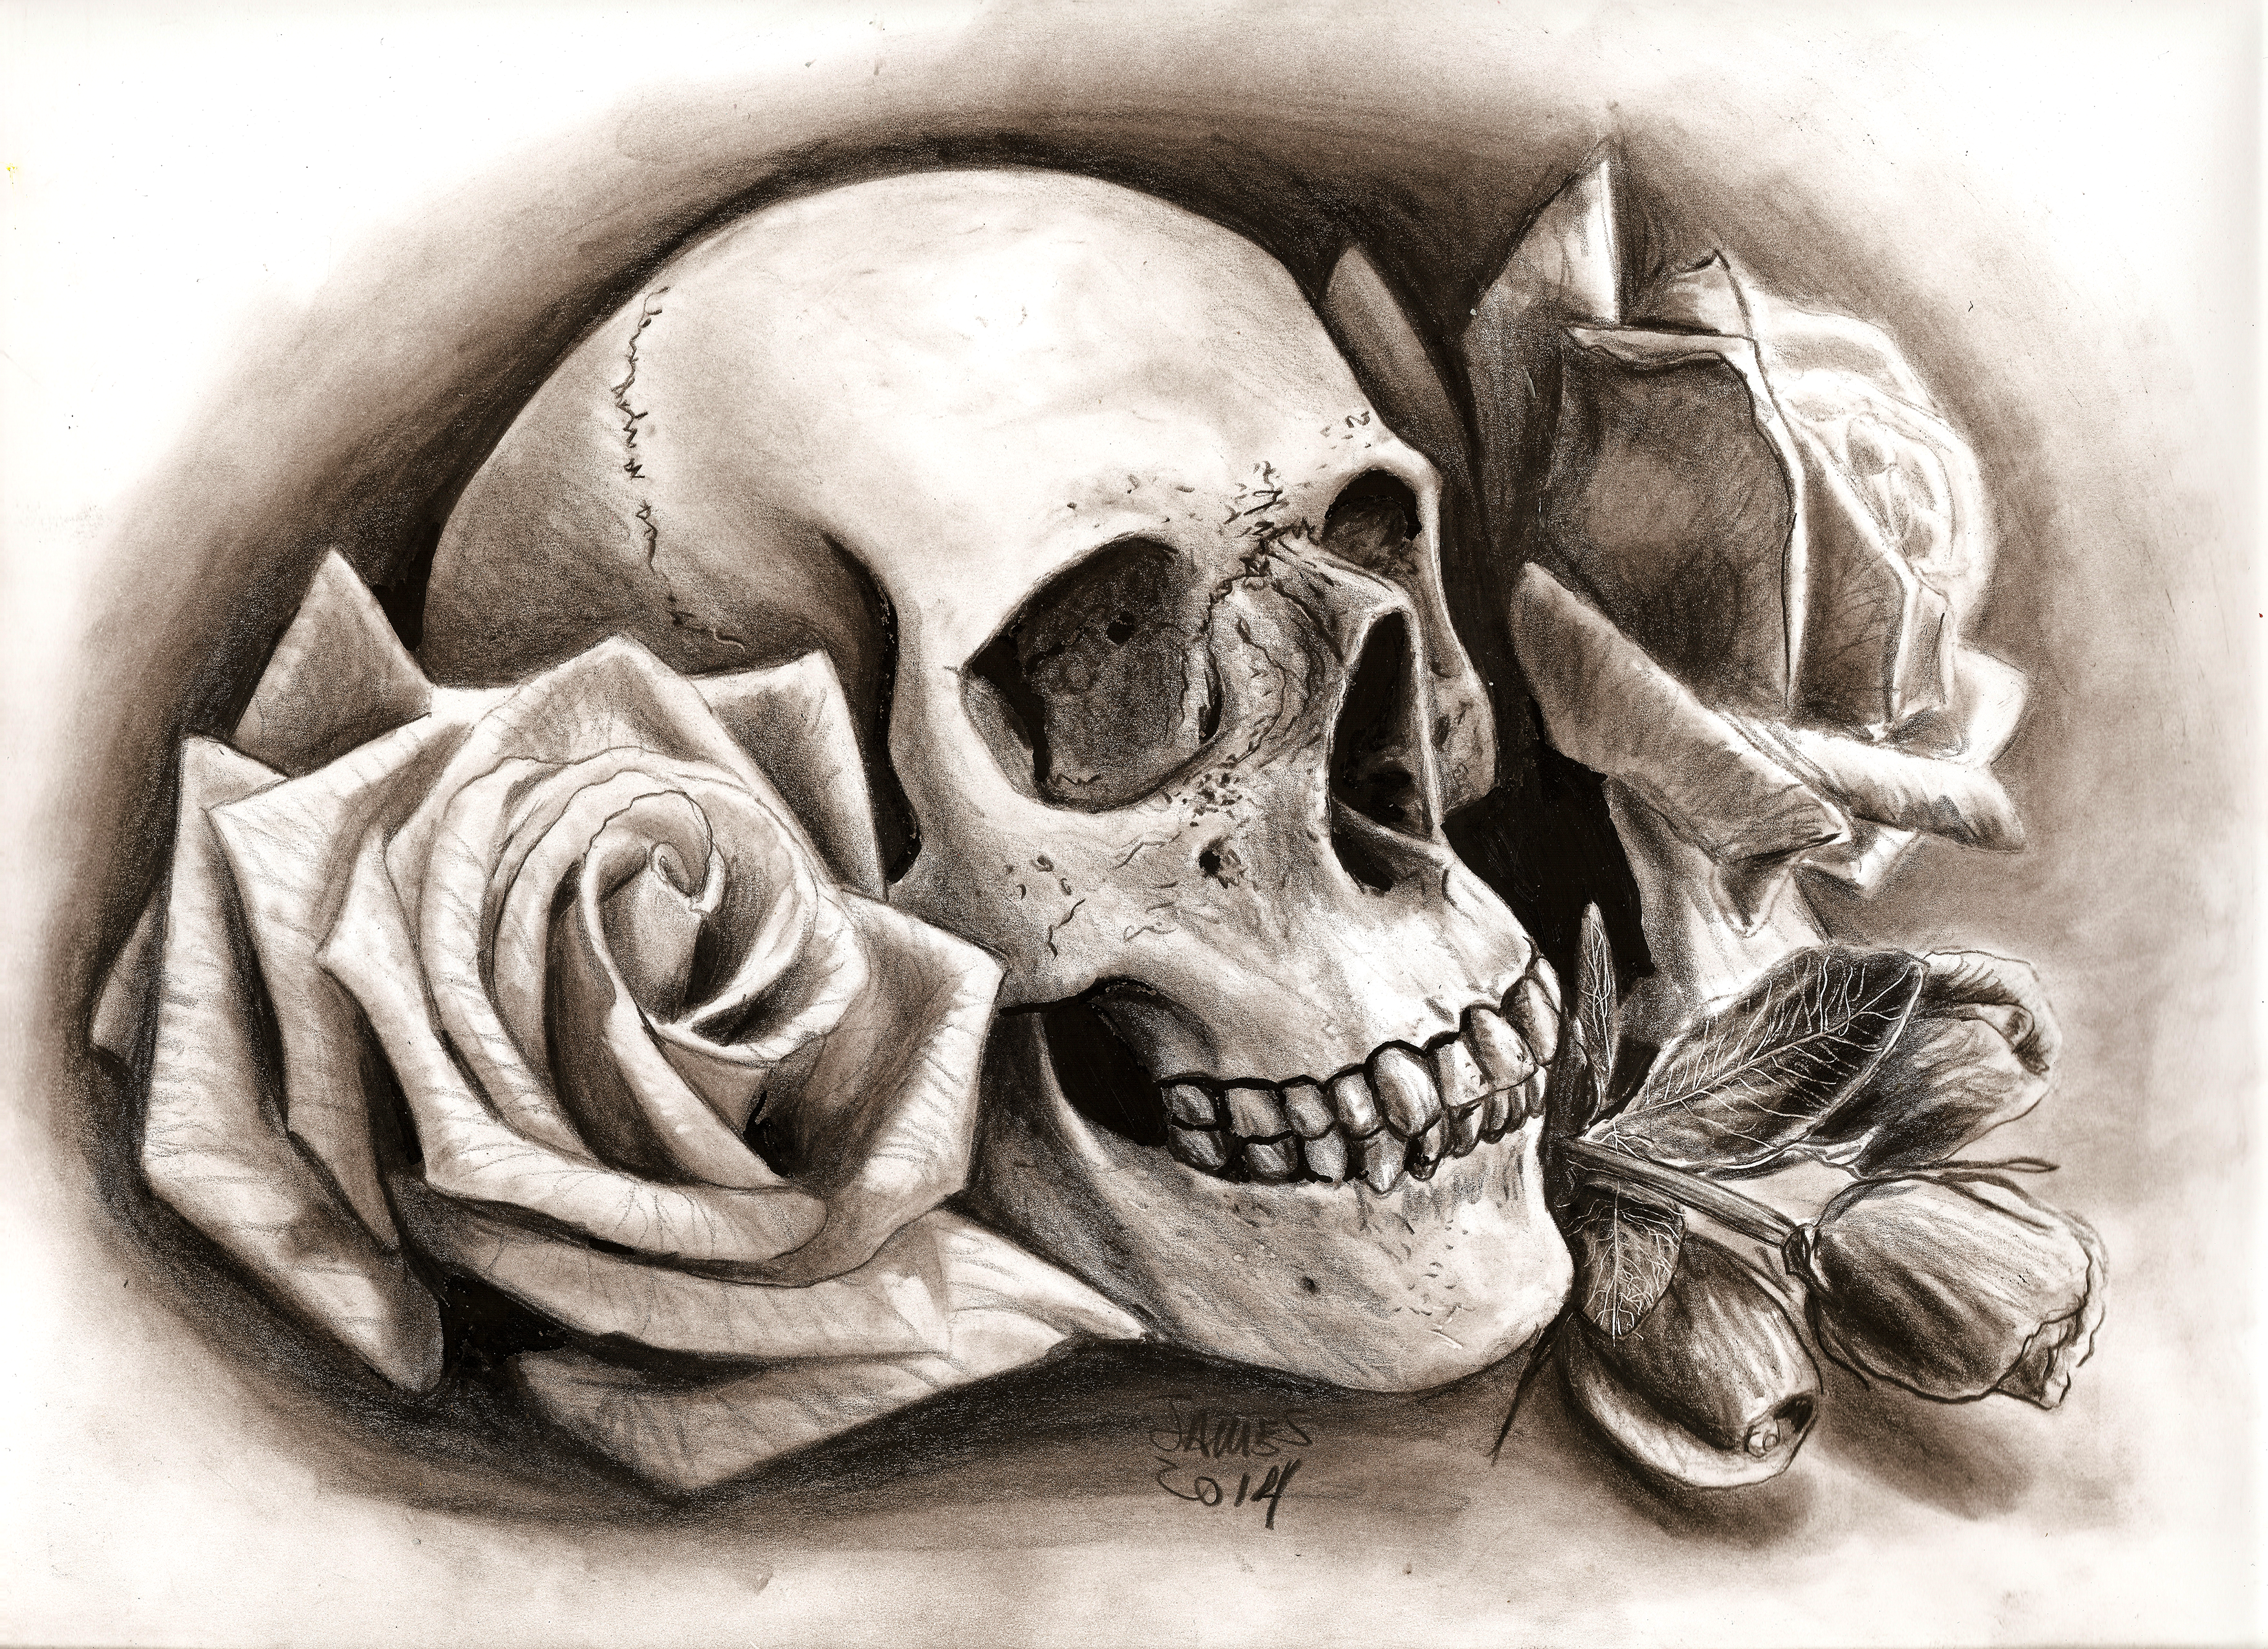 Black Roses And Skulls